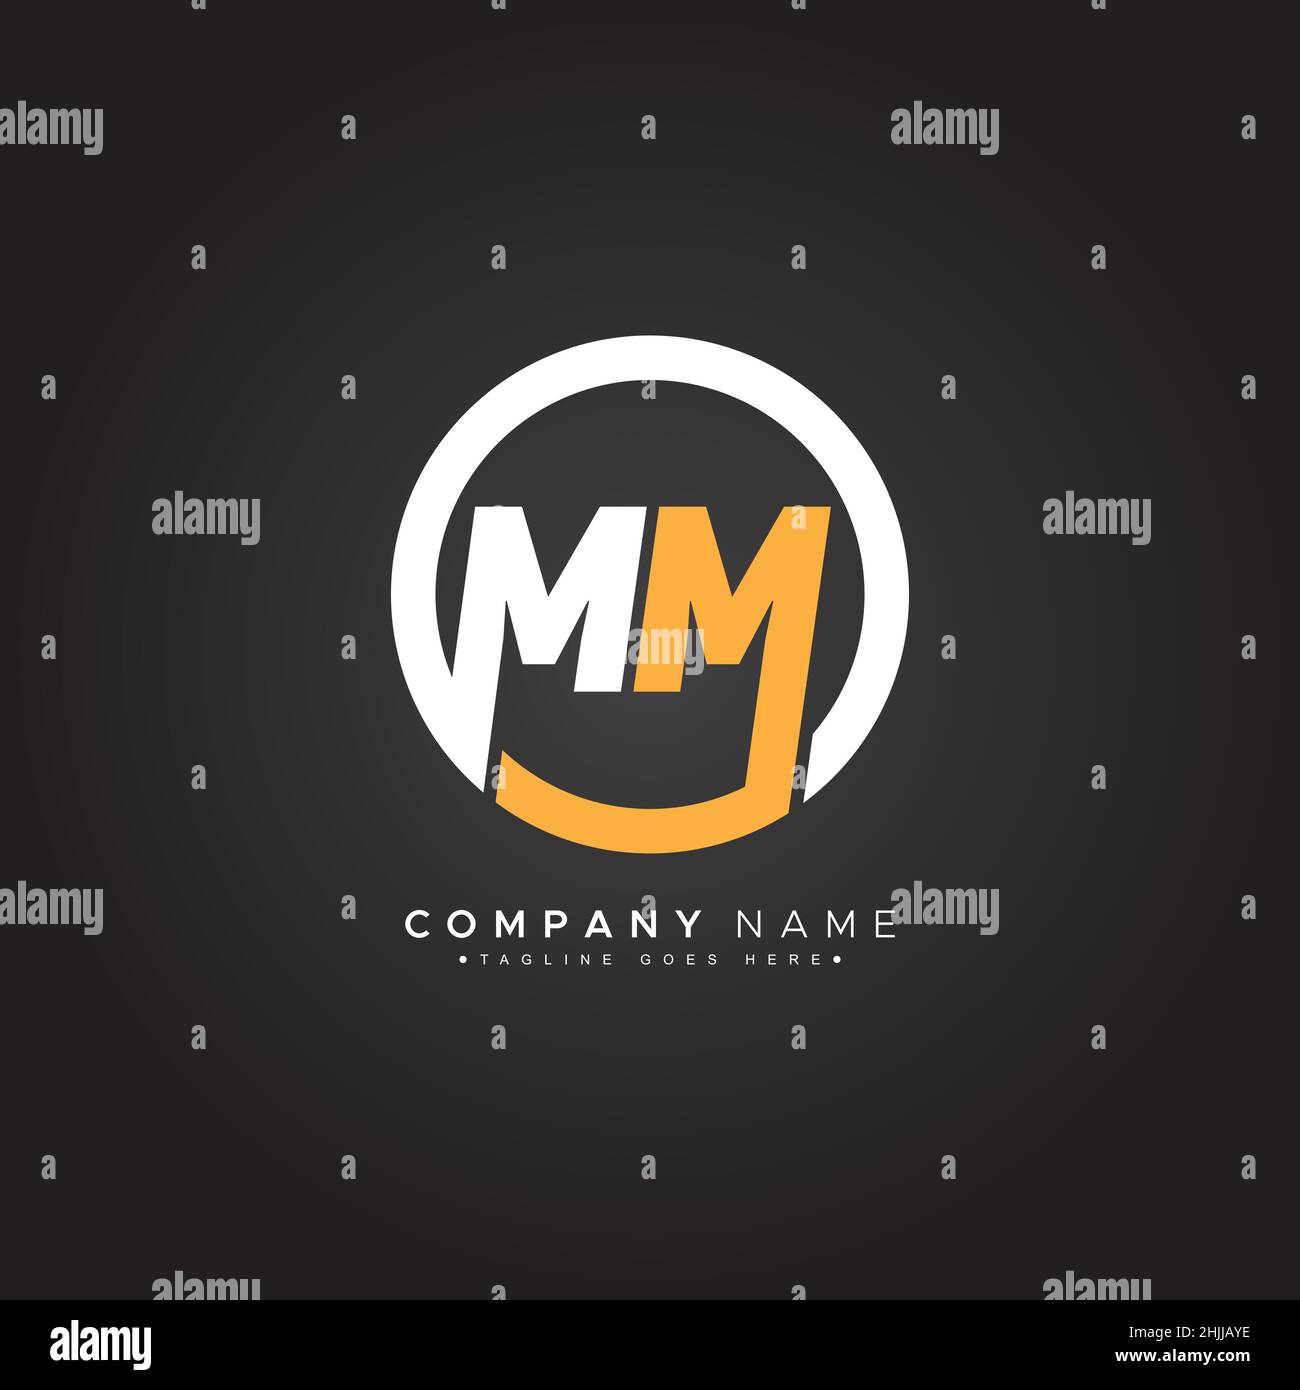 28 Best MM logo ideas  ? logo, mm logo, logo design